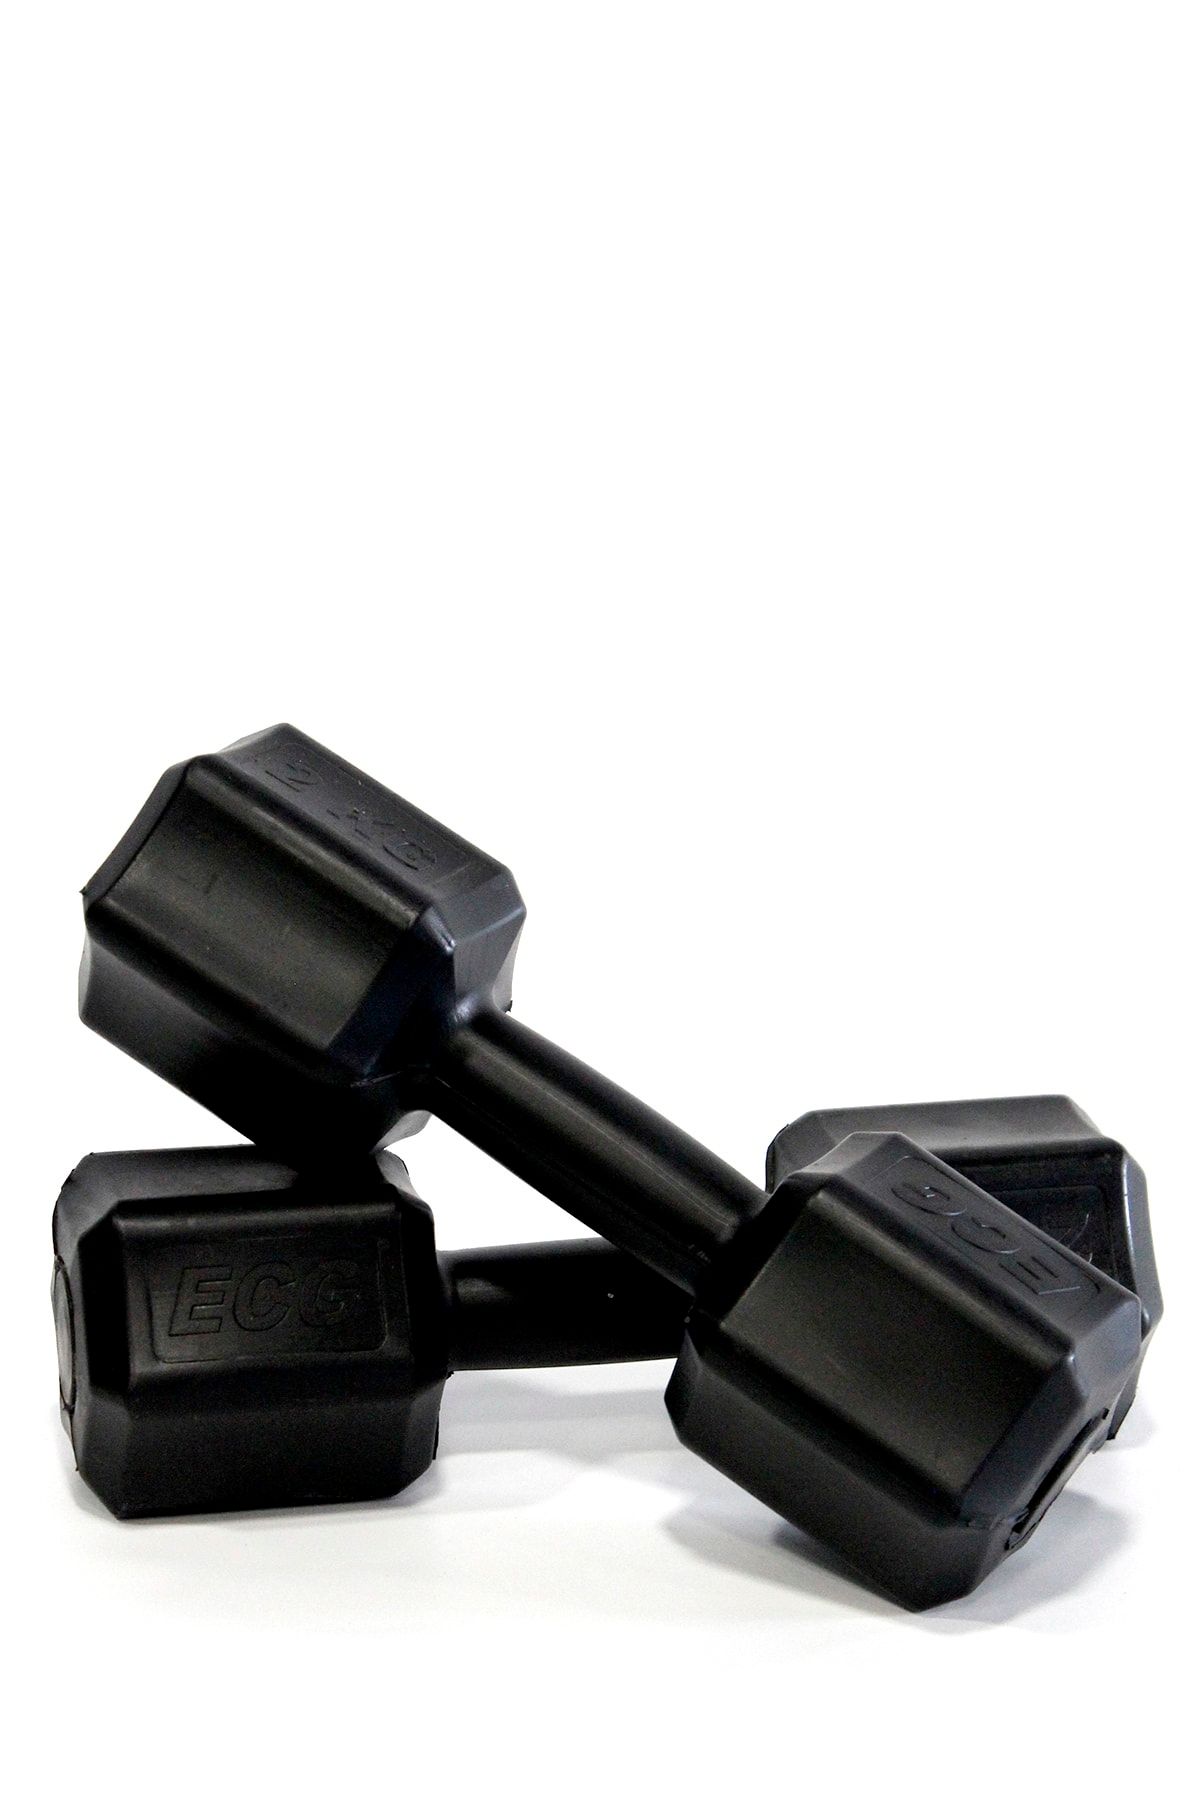 ECG Spor 2 Kg X 2 Adet 4 Kg Dambıl Seti 4 Kg Dumbell Set (siyah)